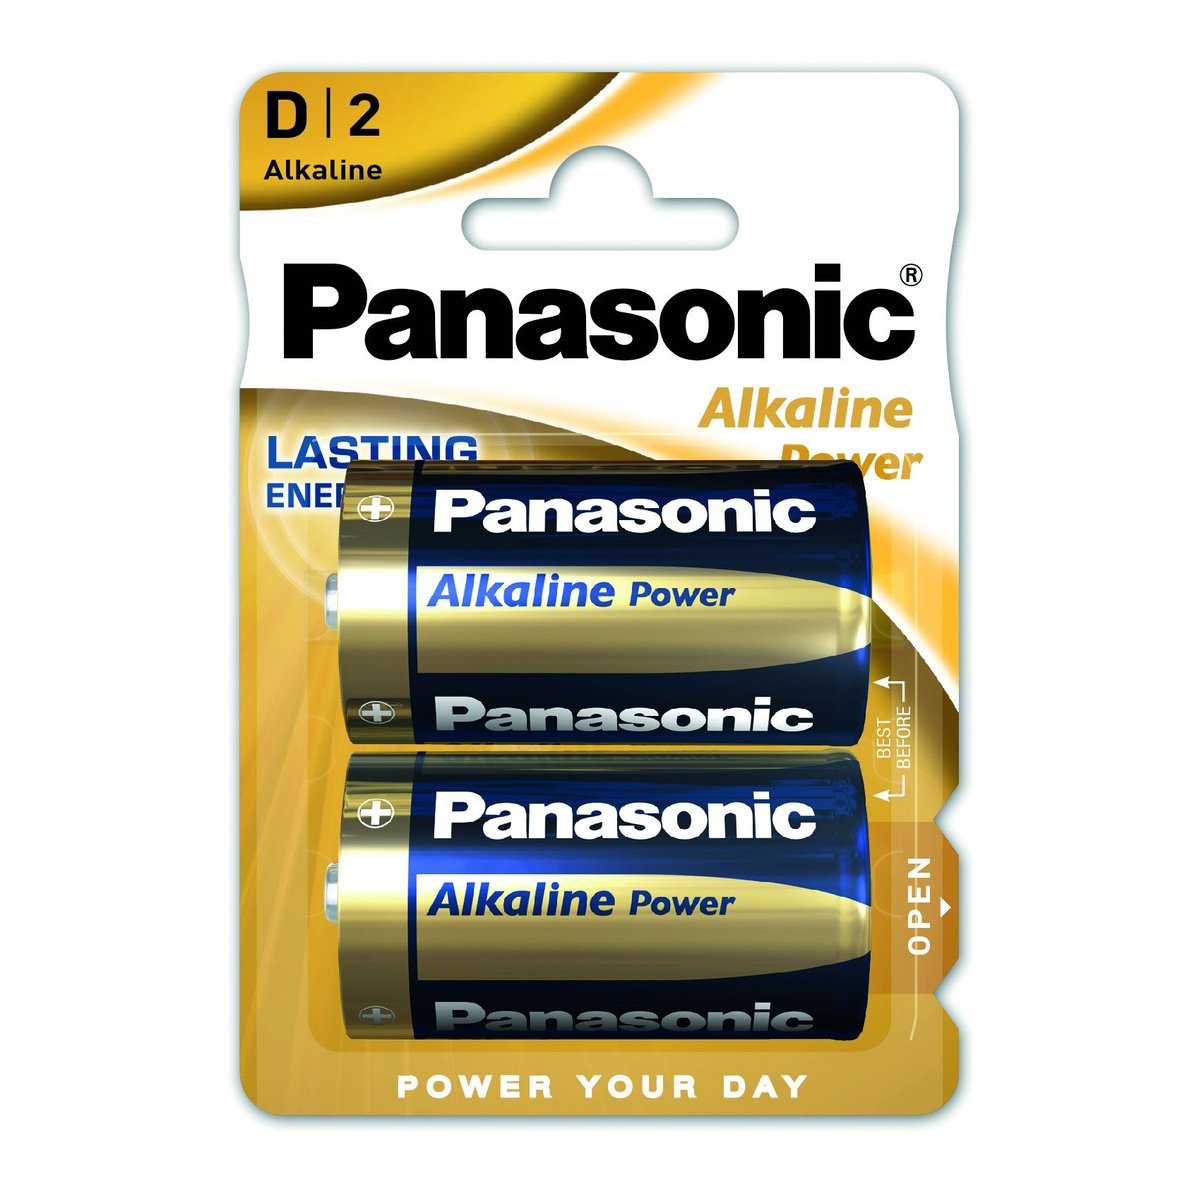 Panasonic Alkaline power D baterie